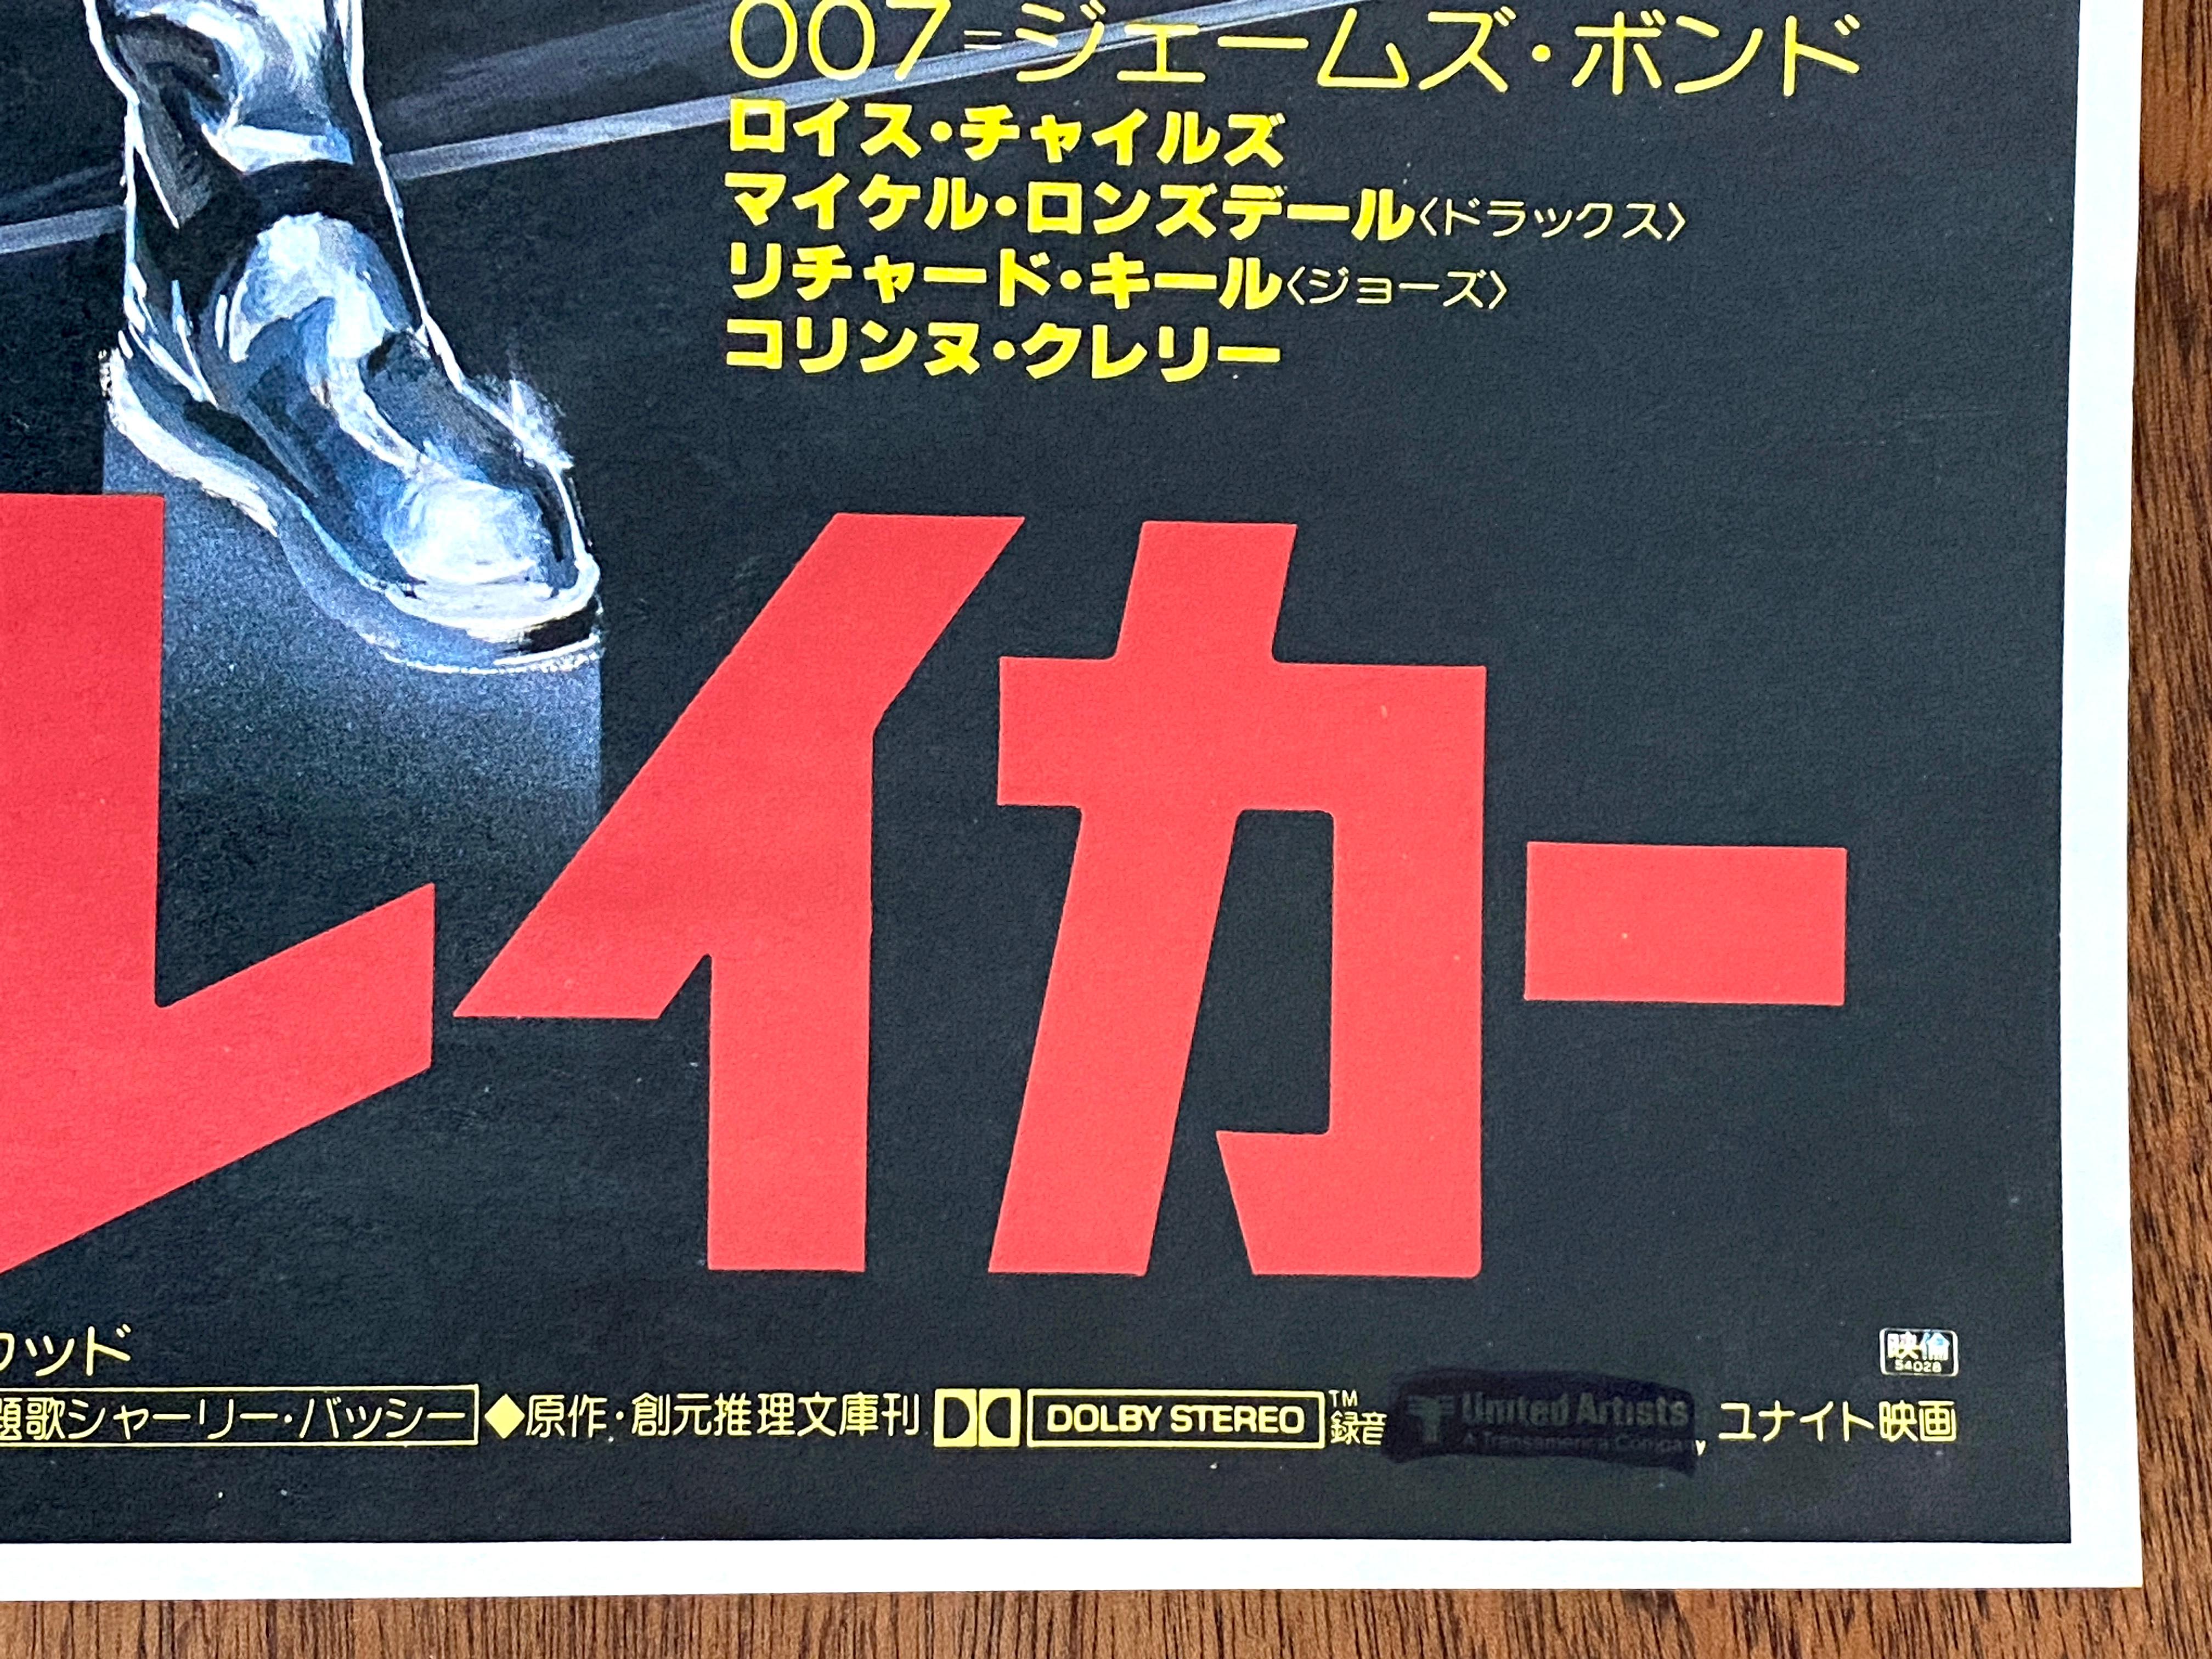 James Bond 'Moonraker' Original Vintage Movie Poster, Japanese, 1979 1